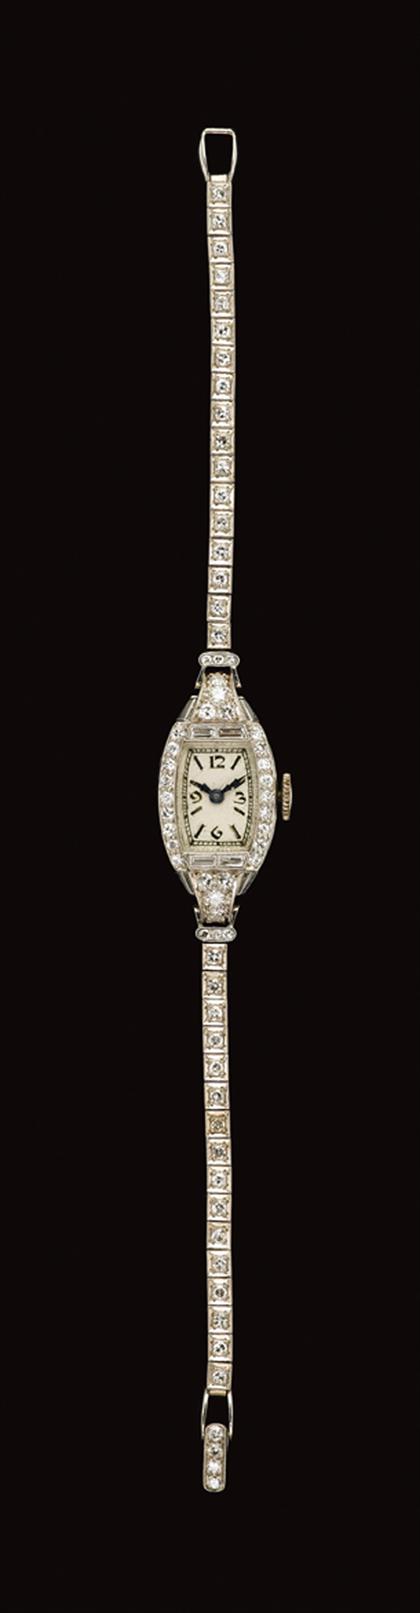 Lady s diamond and palladium wristwatch  4ac75